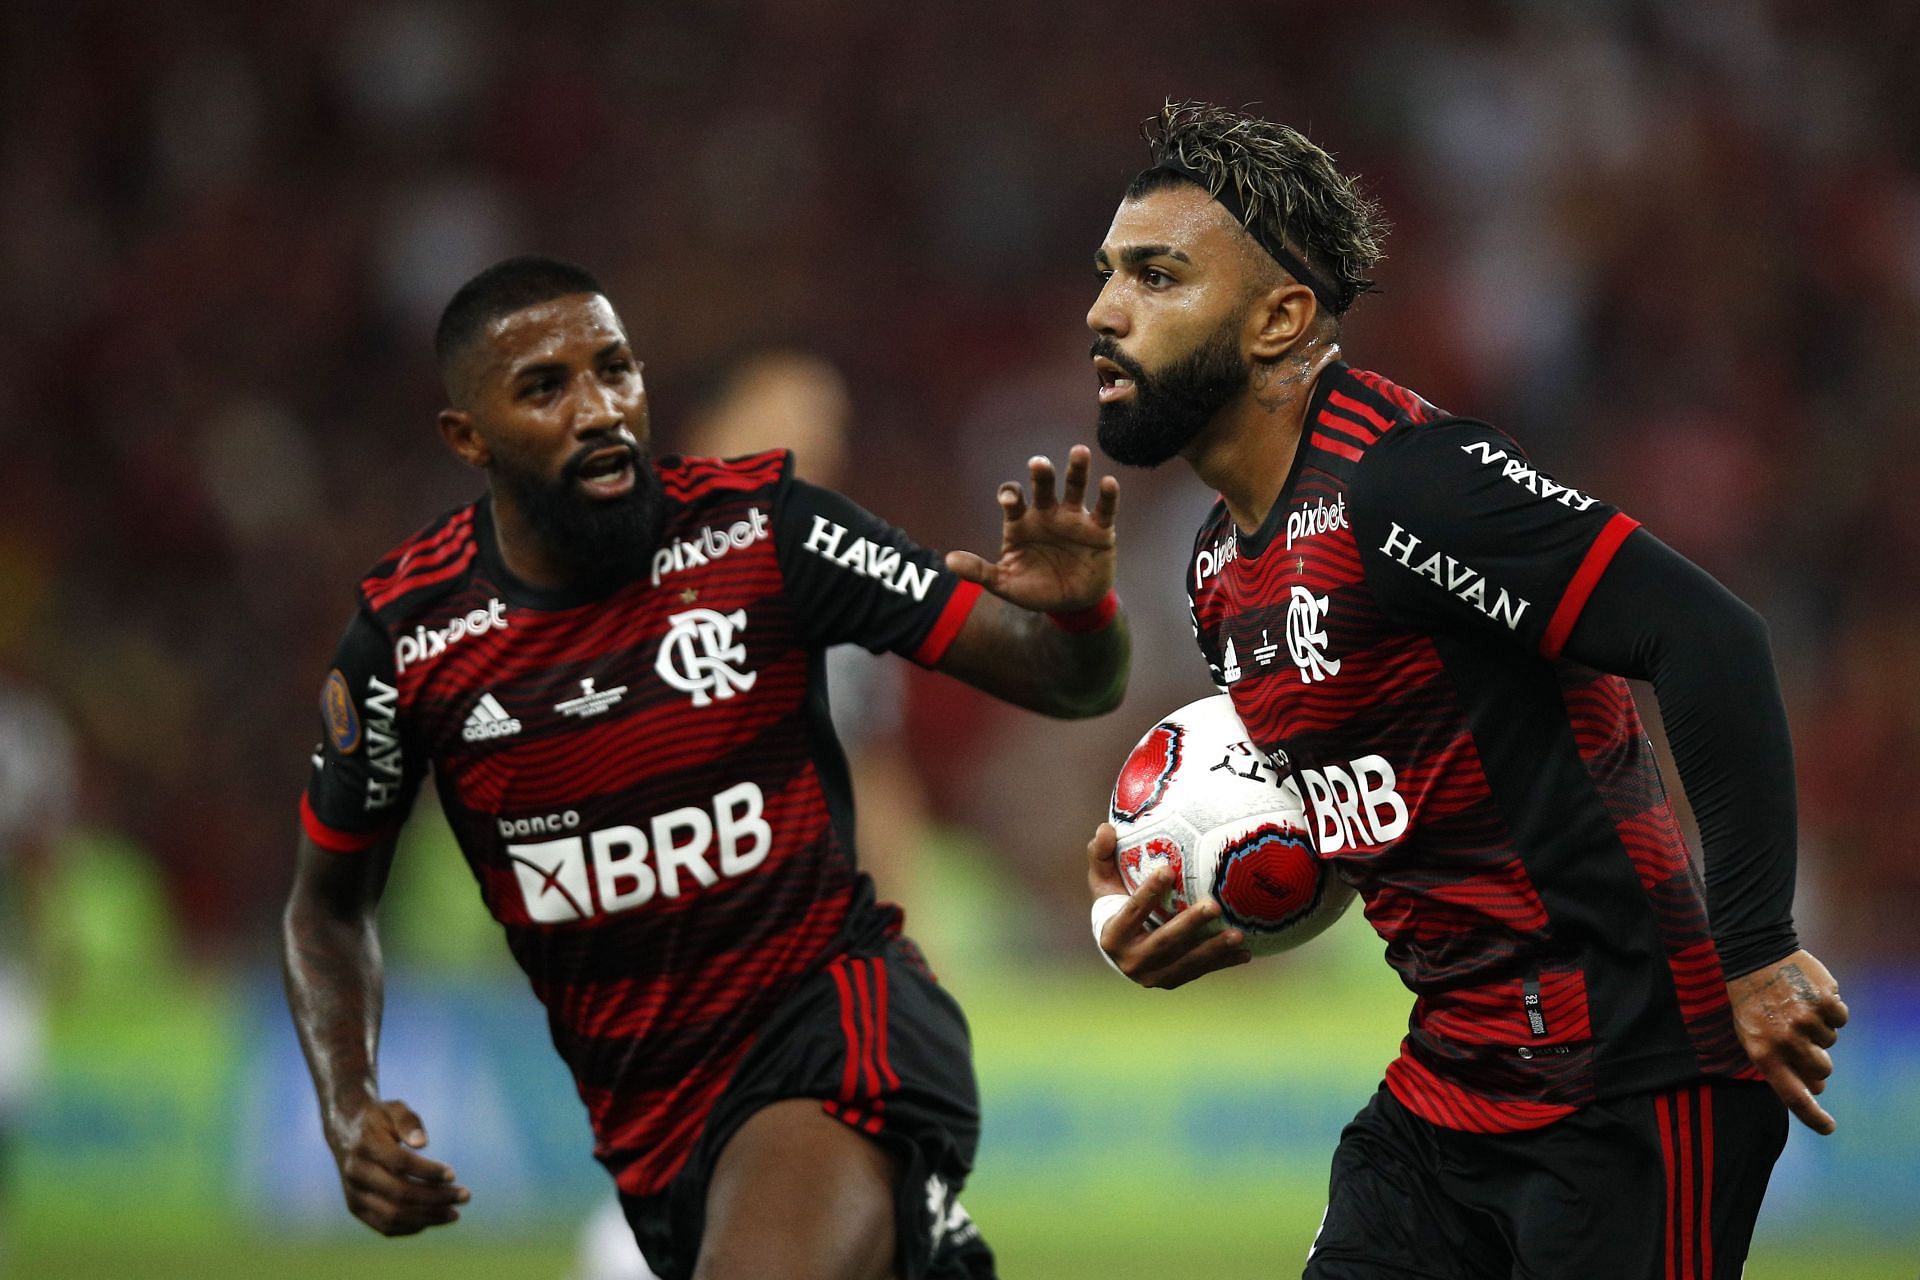 Flamengo play Atletico Mineiro on Sunday